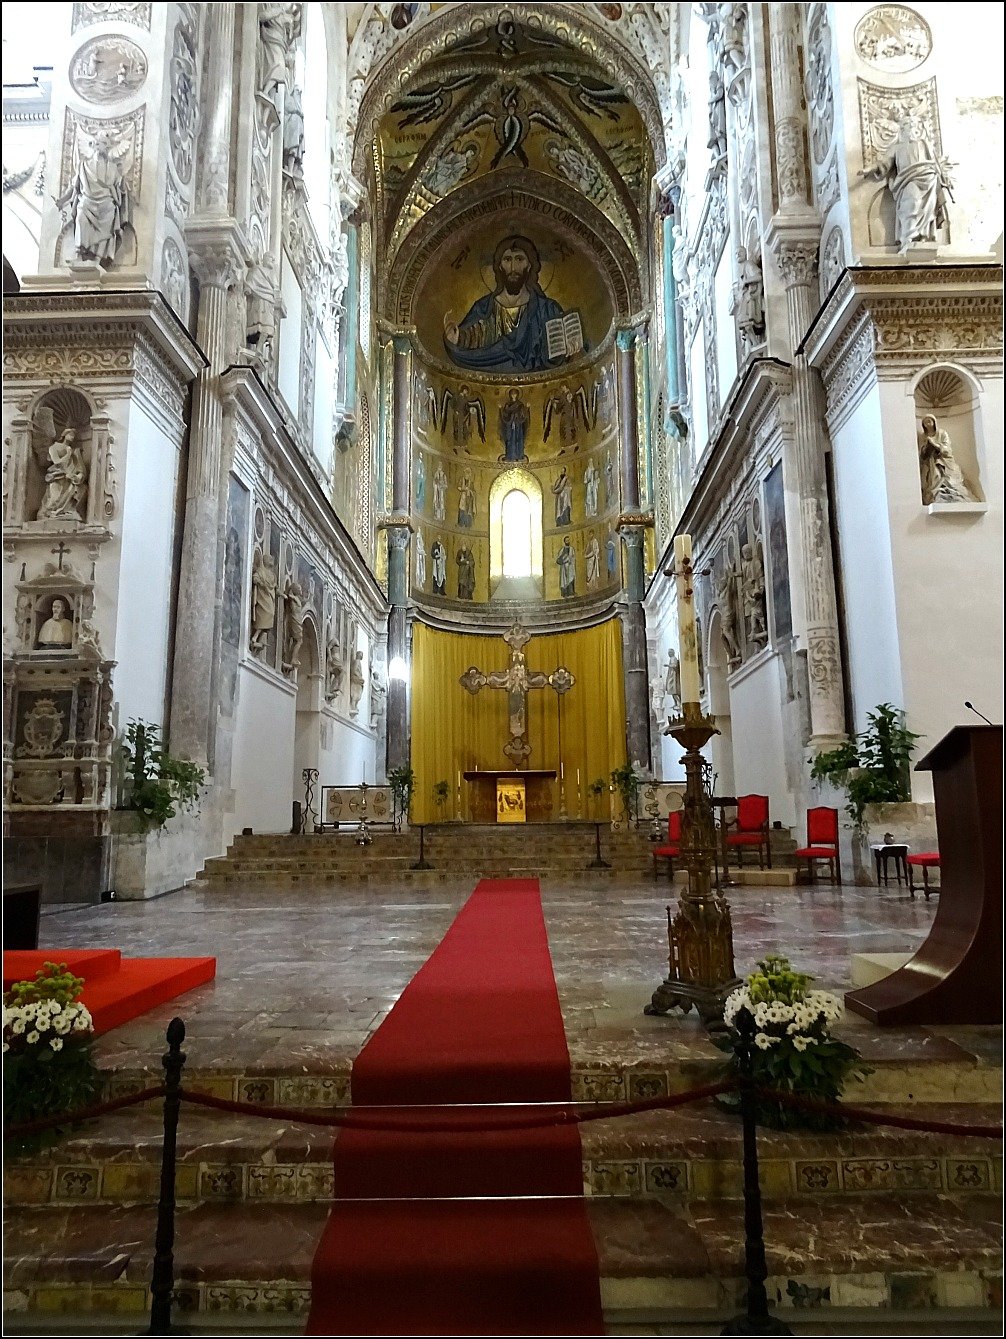 Cefalu Duomo Mosaics, Sicily